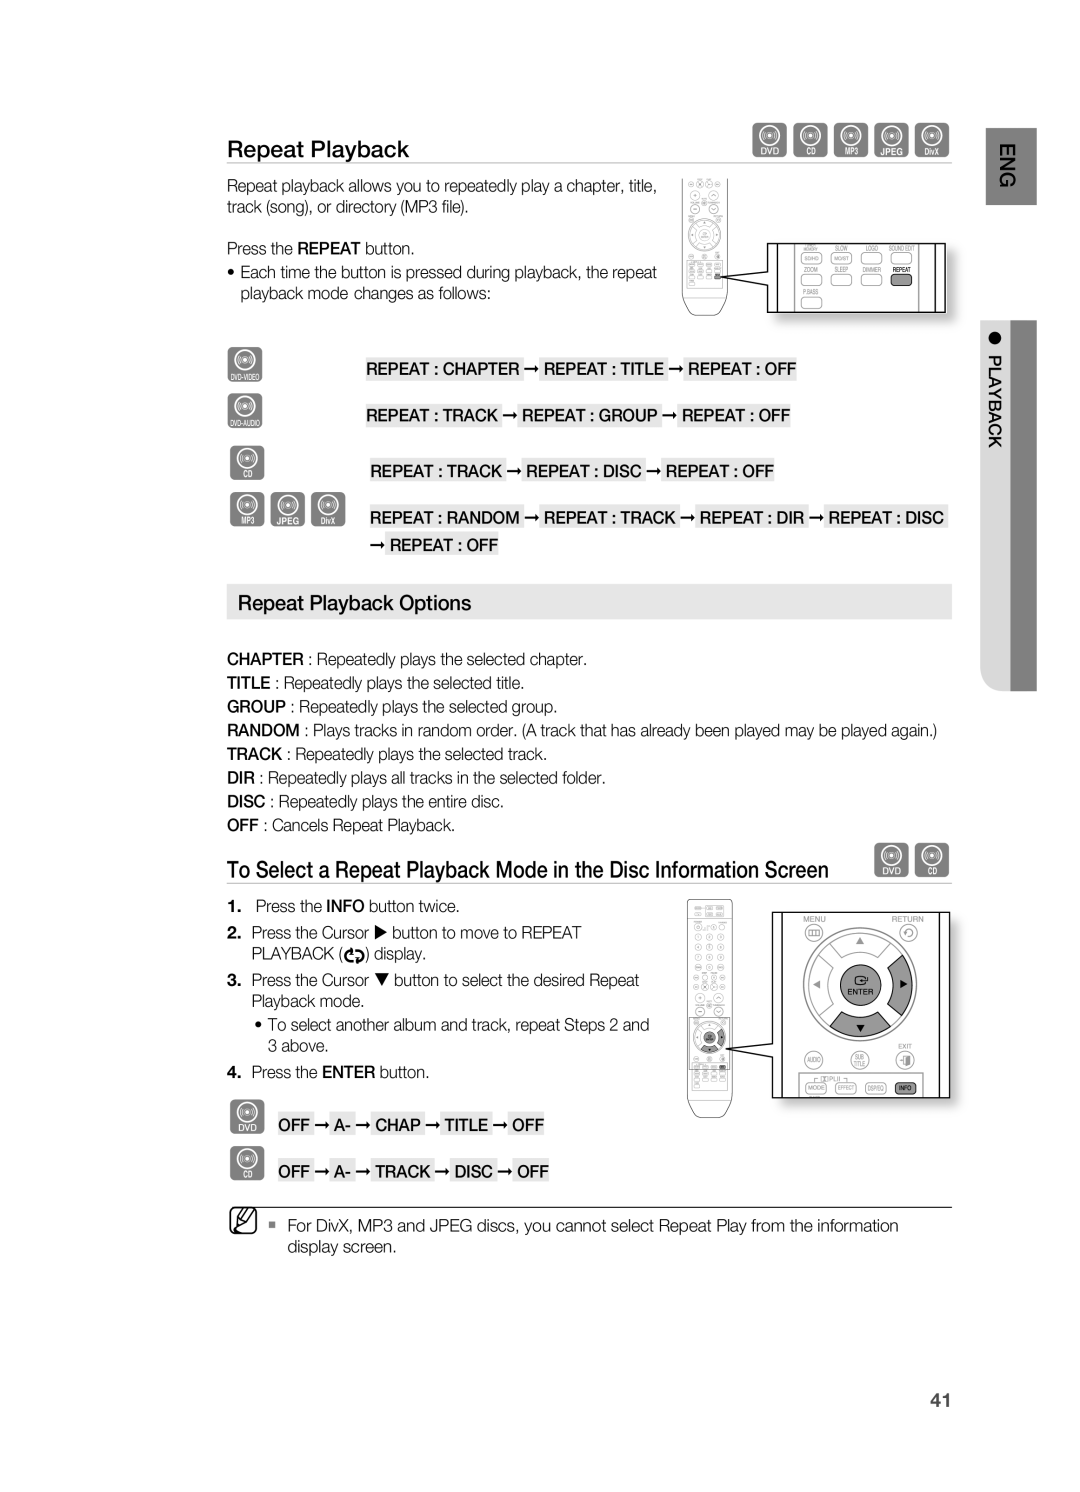 Samsung HT-TZ312 manual repeat Playback Options, dBAGD 